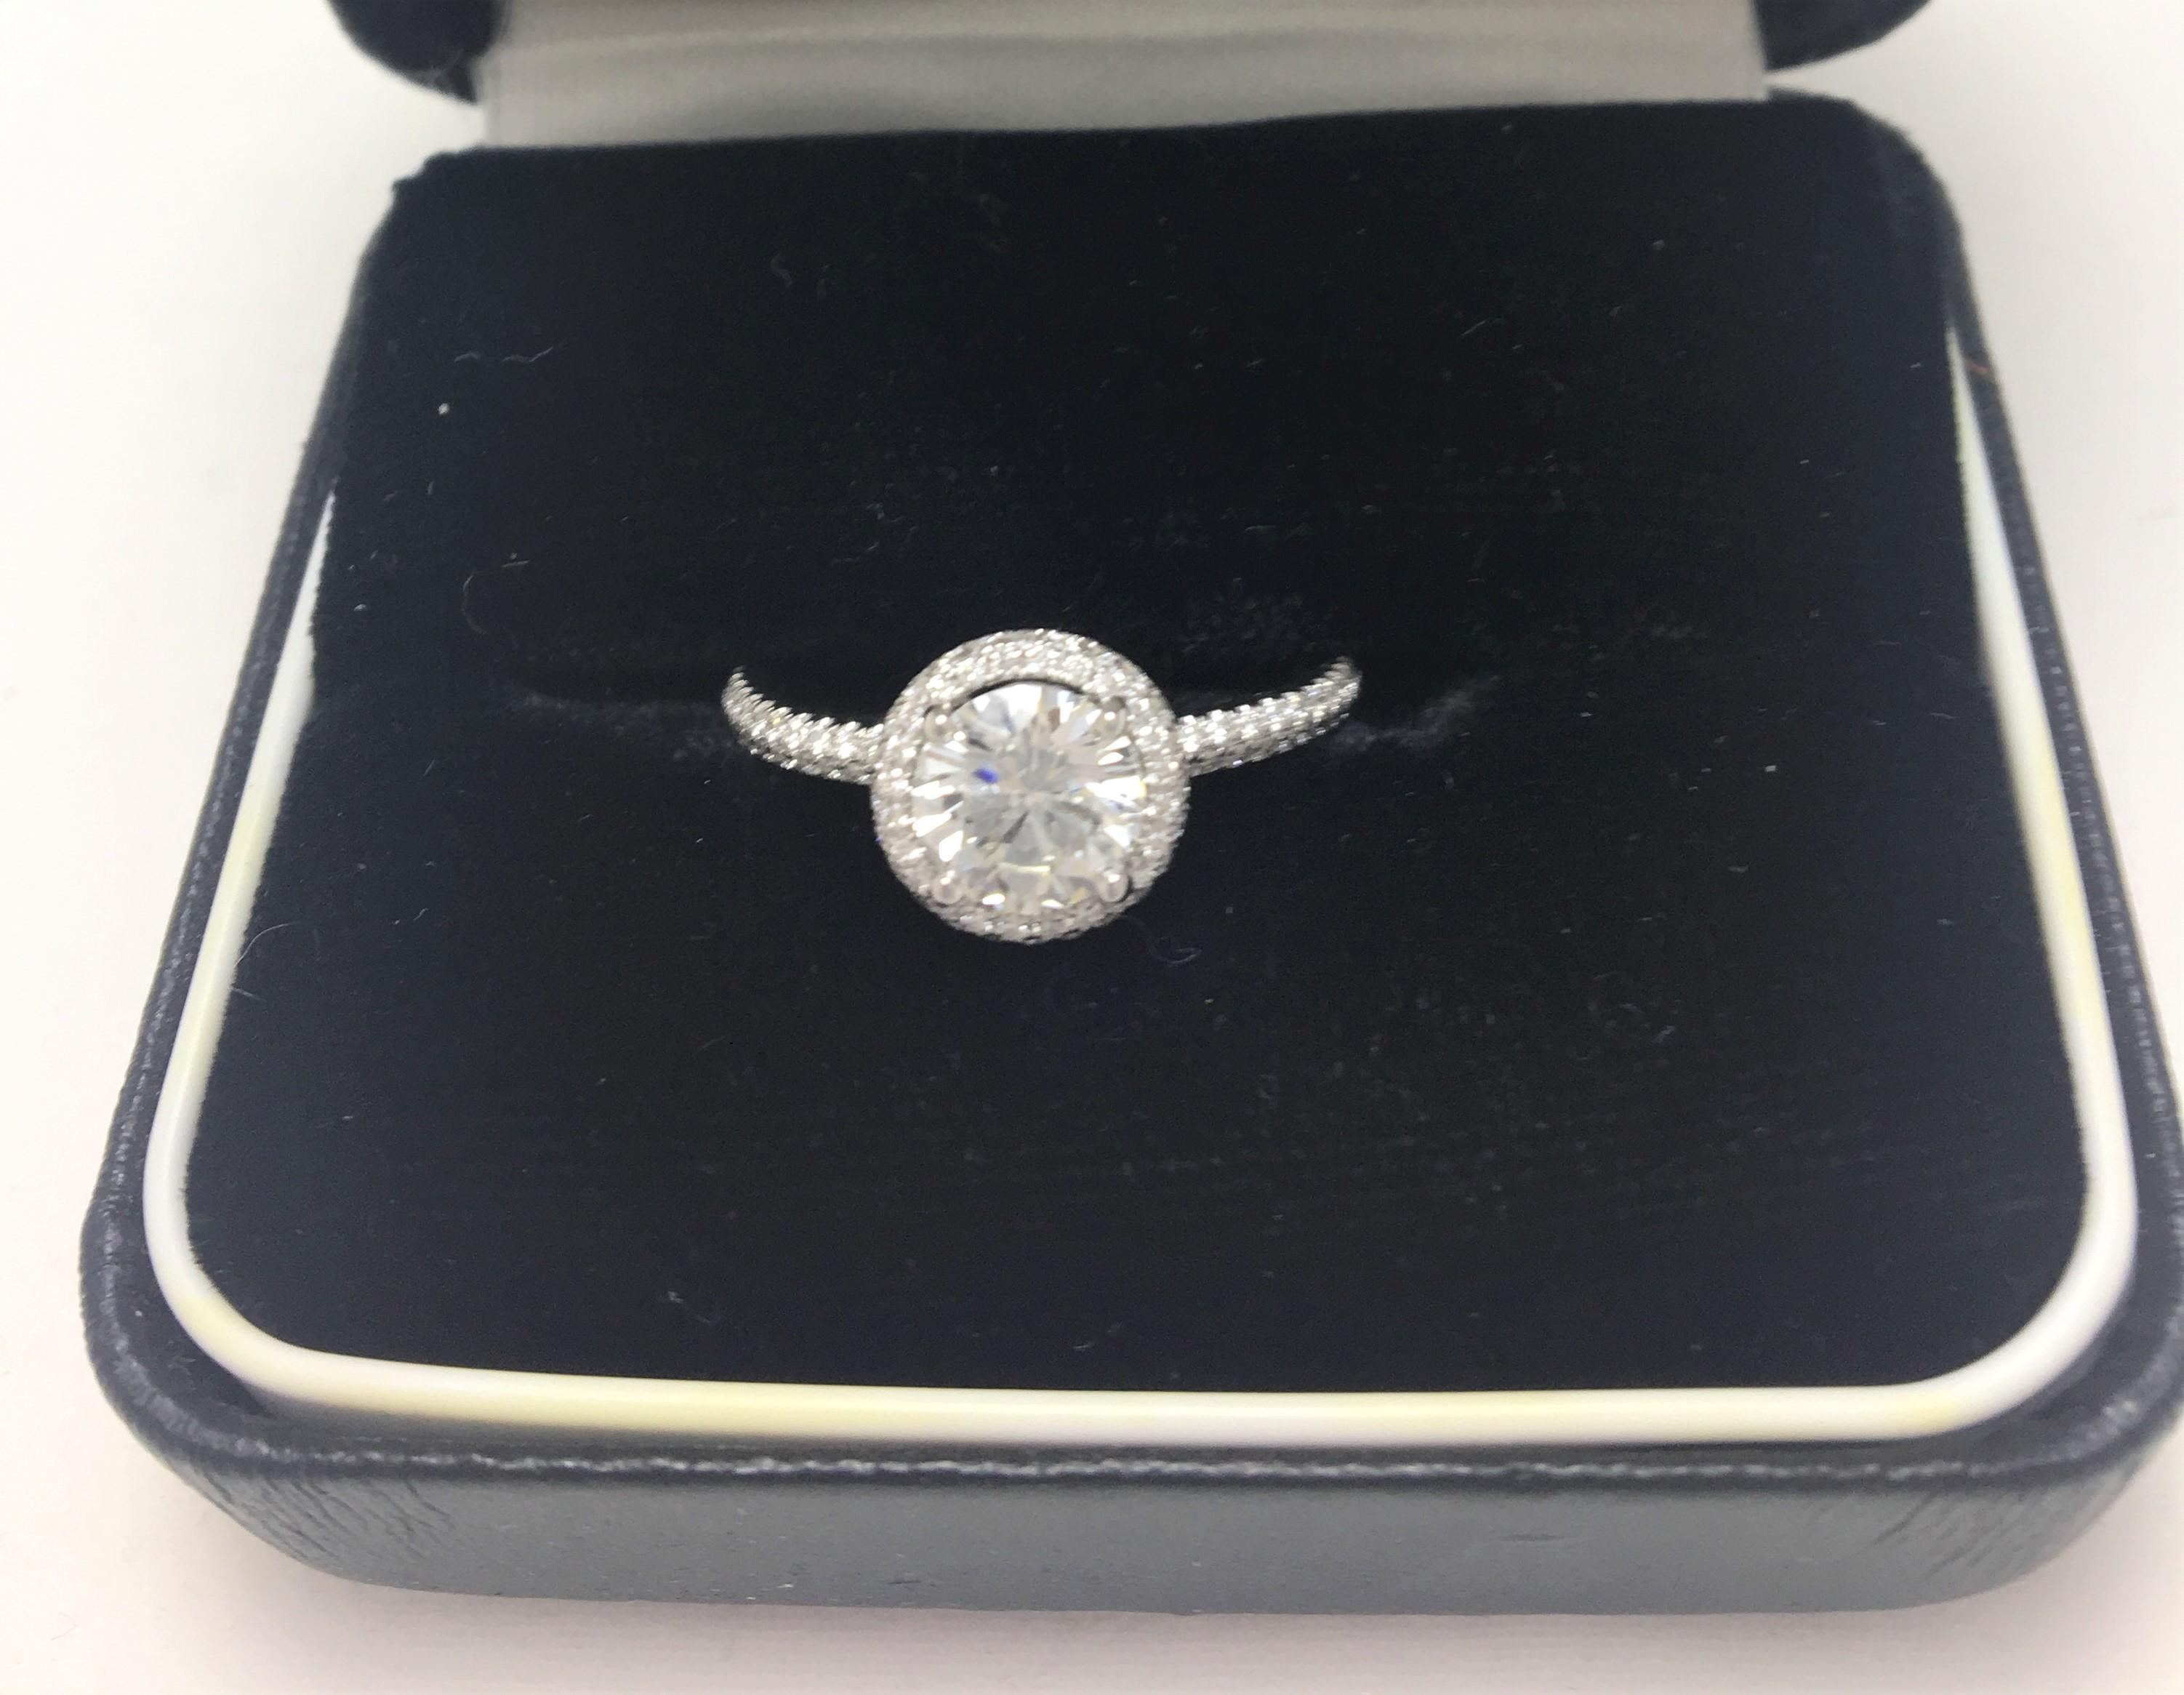 1.34 carat diamond ring